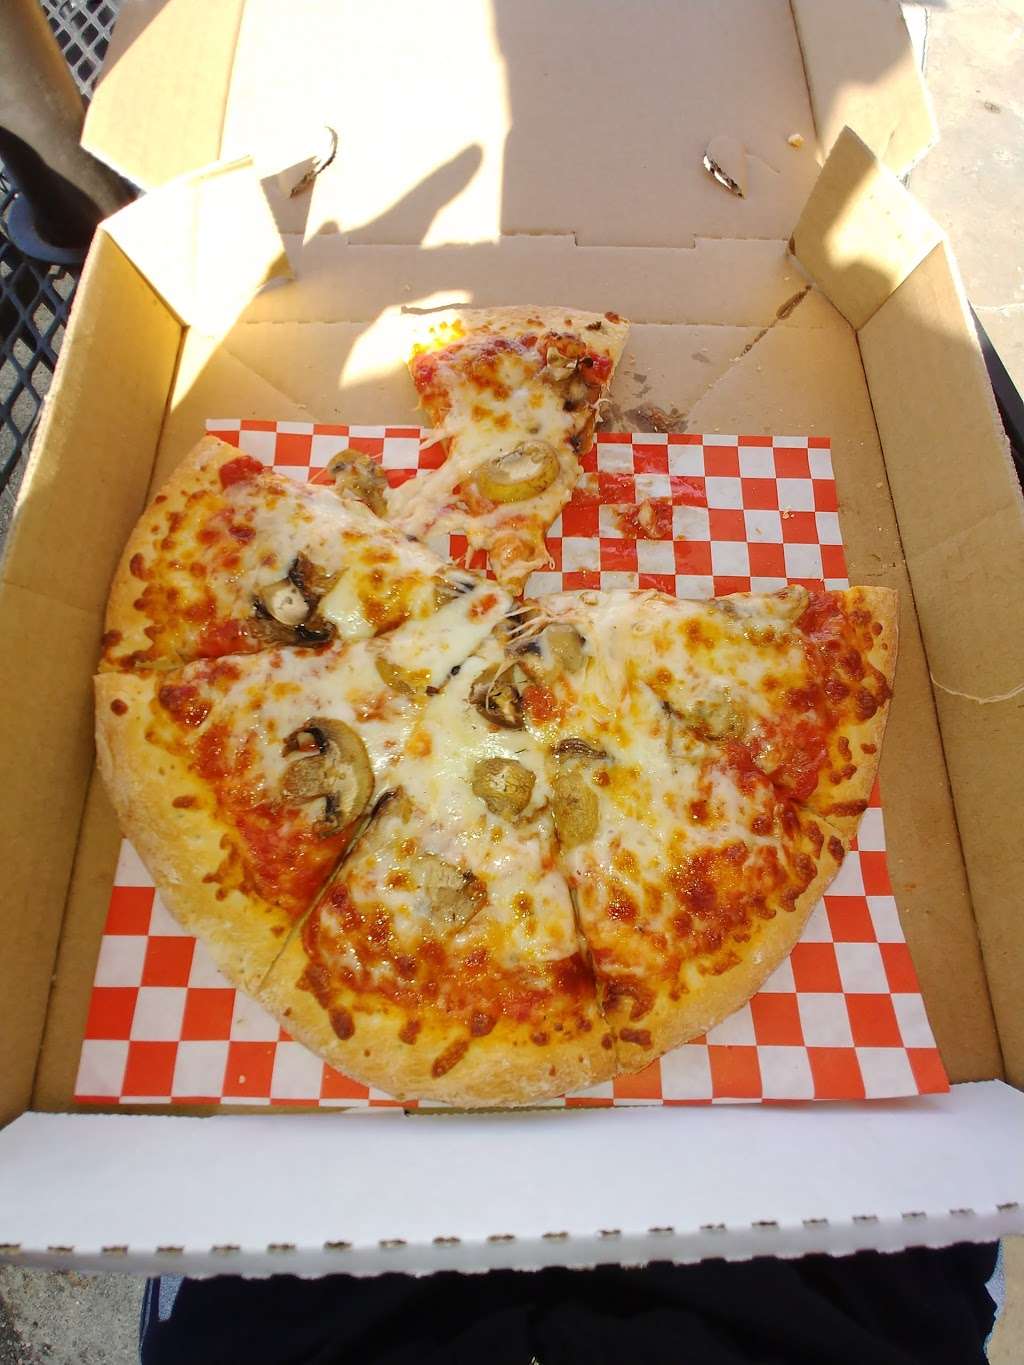 LW Pizza | 2201 N Lakewood Blvd, Long Beach, CA 90815 | Phone: (562) 494-6900